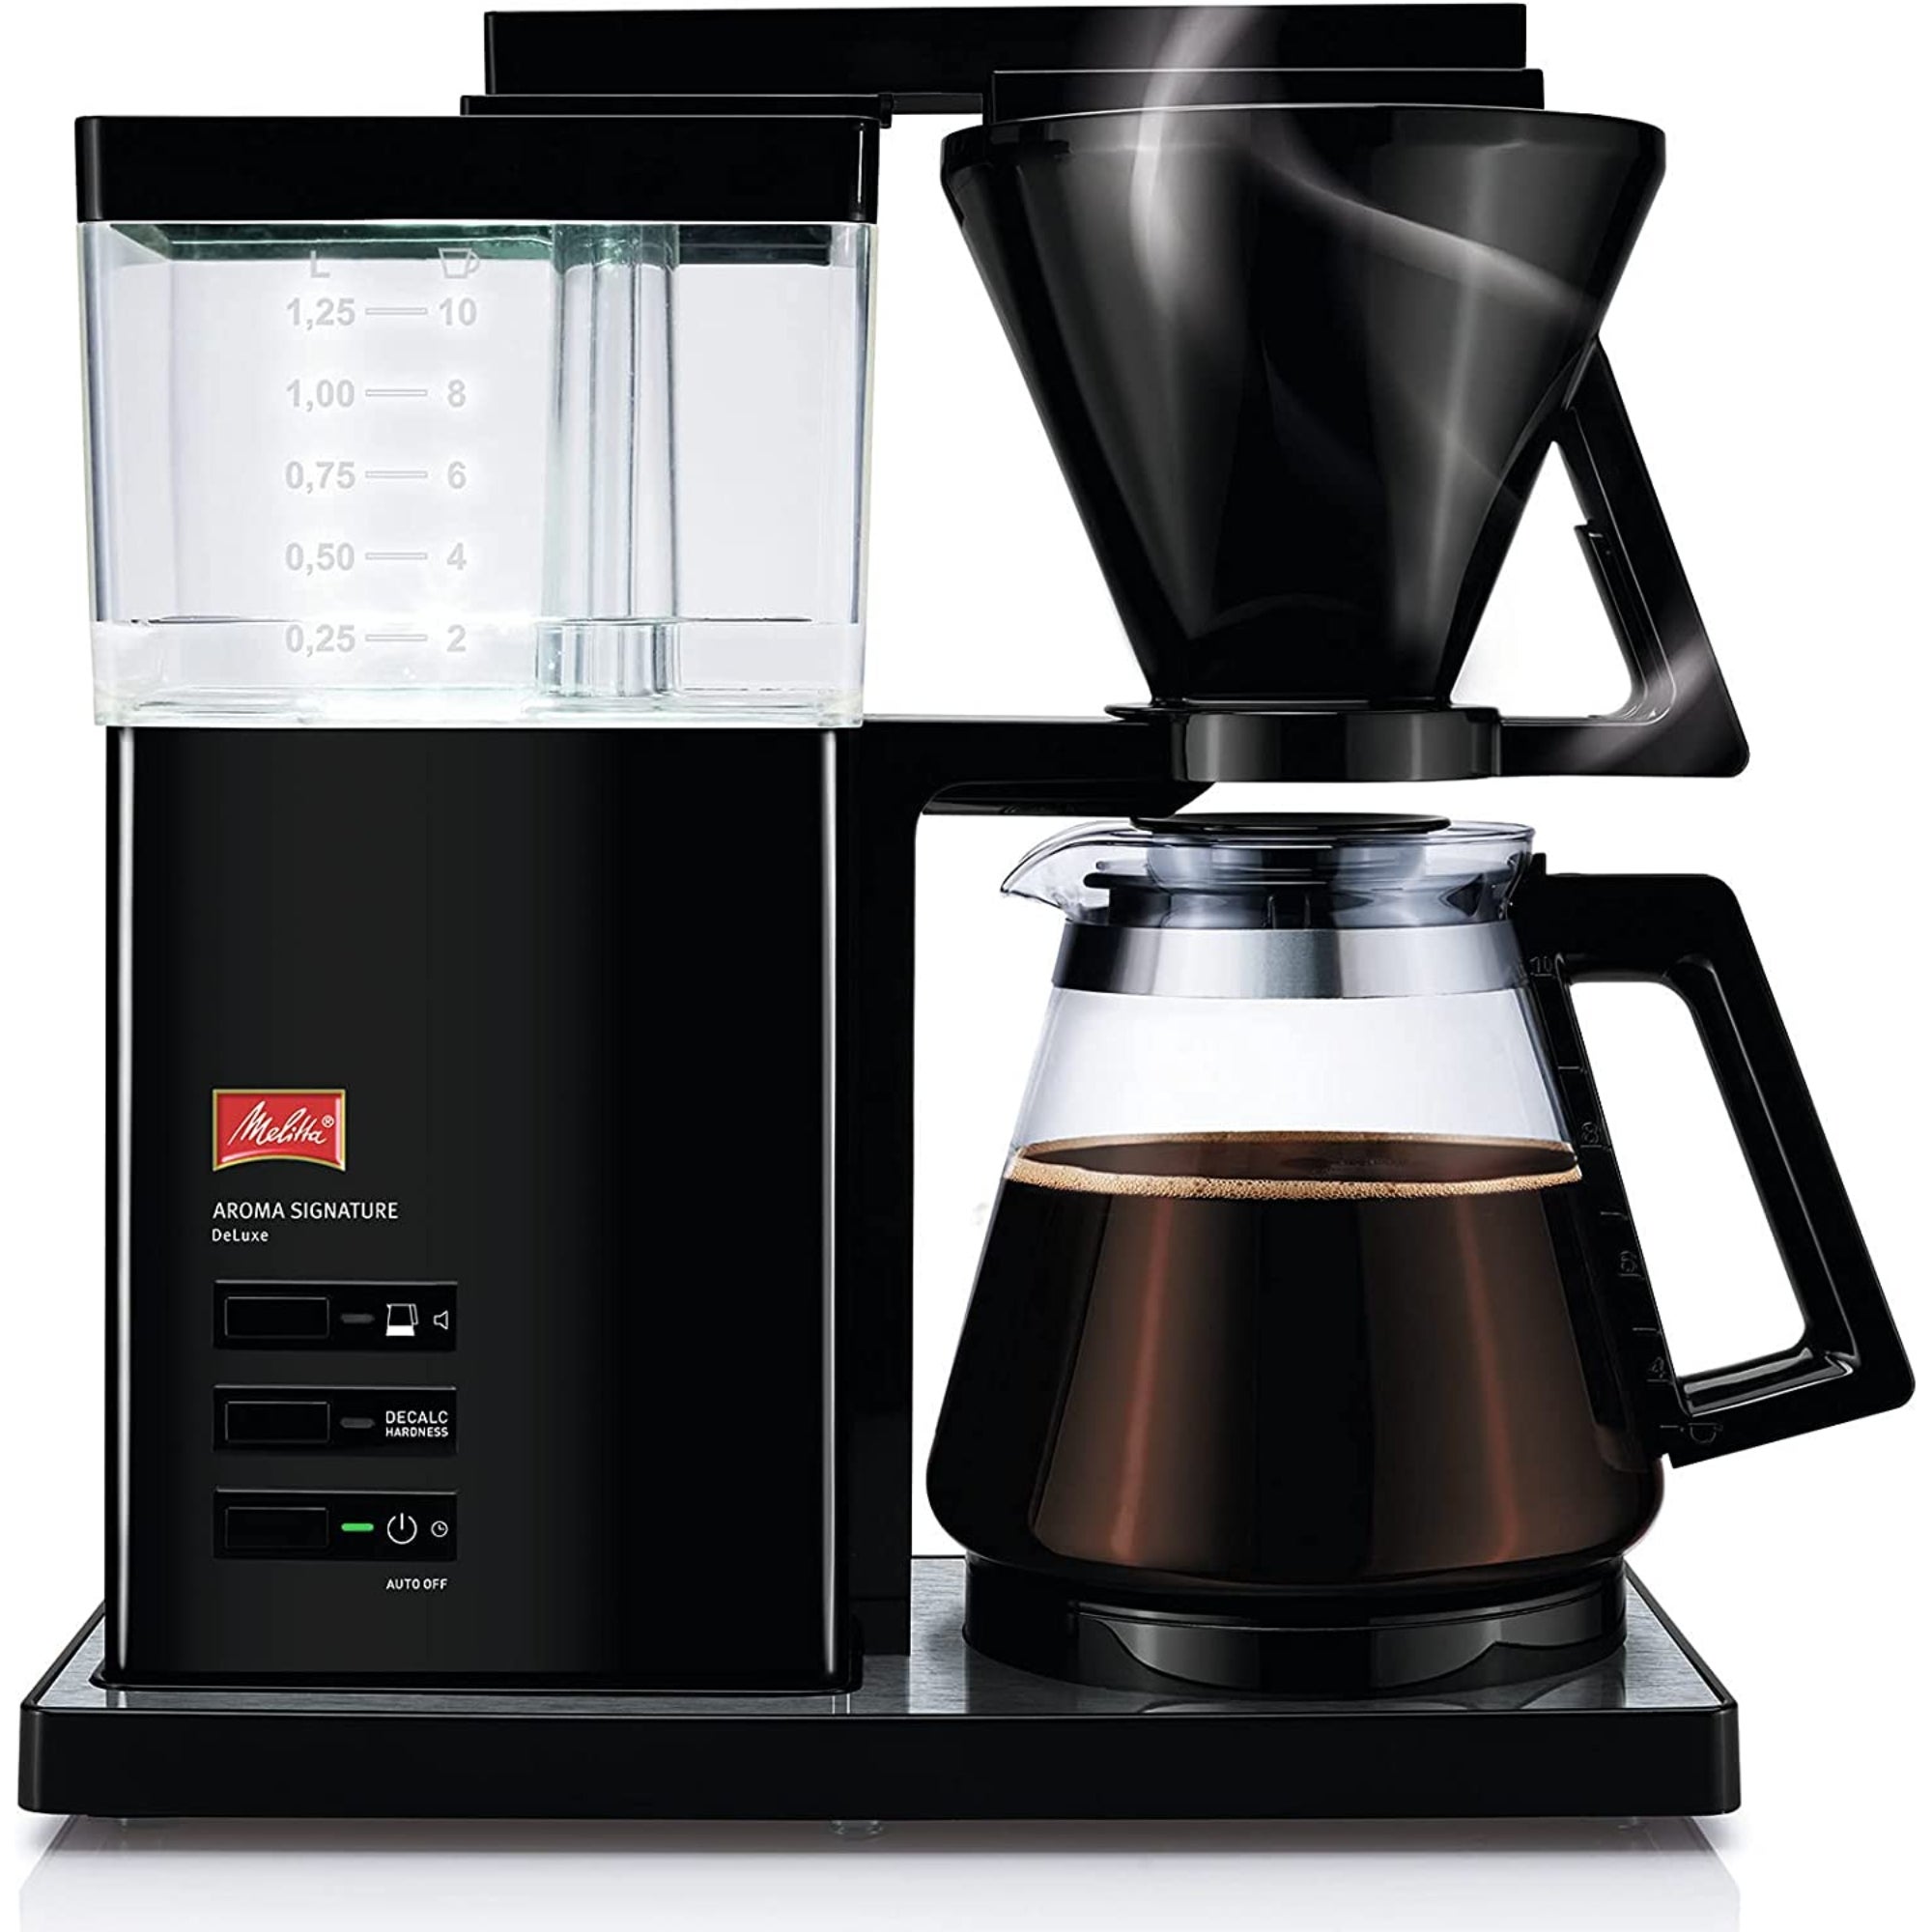 Melitta Aroma Signature Deluxe Filter Coffee Machine Black